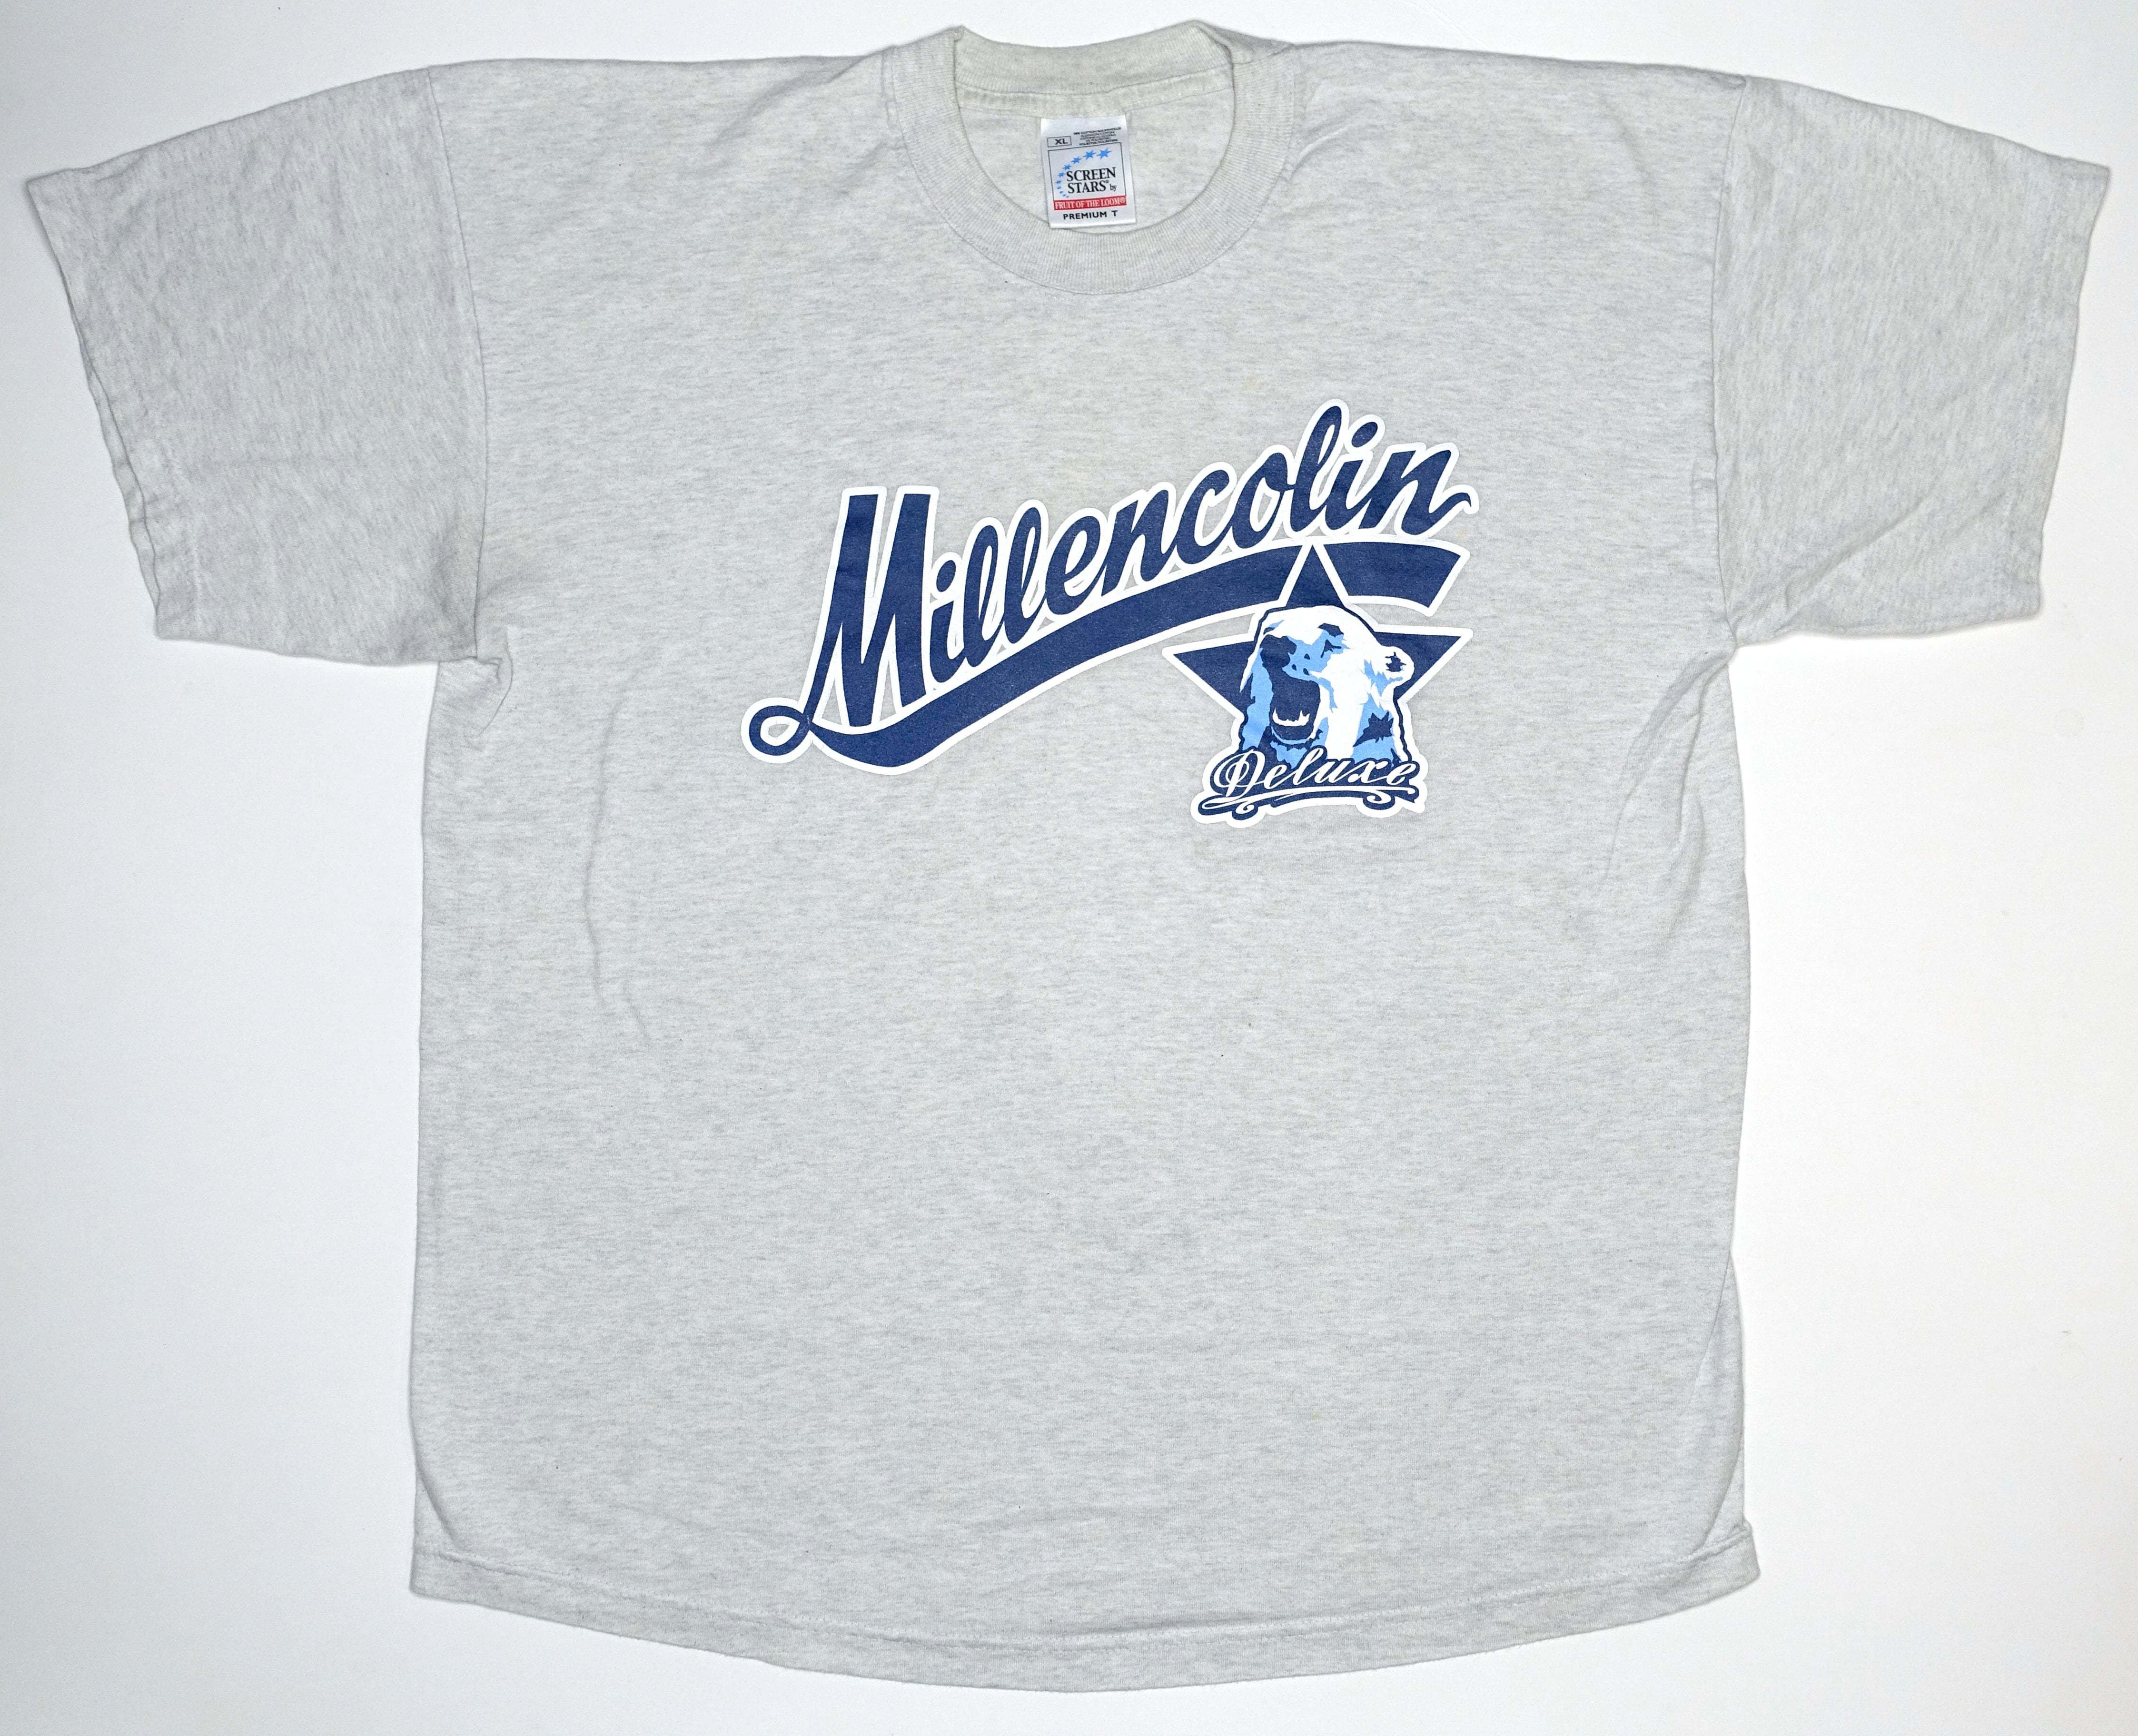 Millencolin - For Monkeys / Polar Bear Deluxe 1997 Tour Shirt Size XL